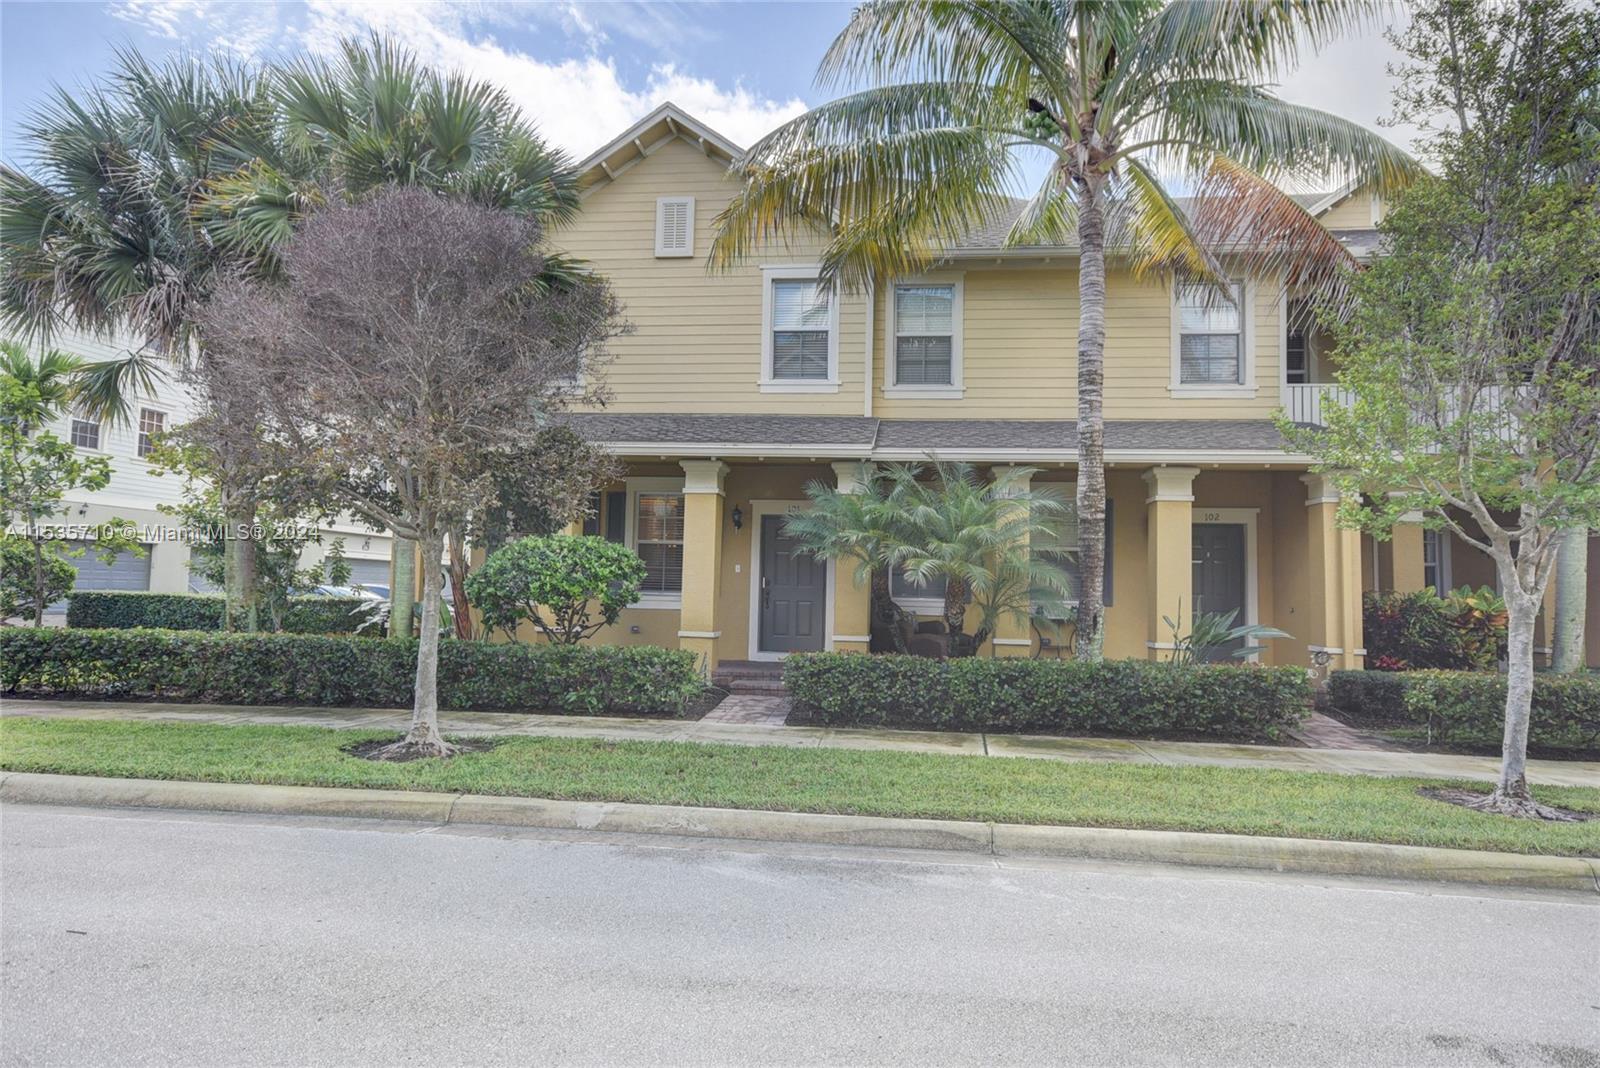 Rental Property at 110 E Pigeon Plum Dr 101, Jupiter, Palm Beach County, Florida - Bedrooms: 3 
Bathrooms: 3  - $2,600 MO.